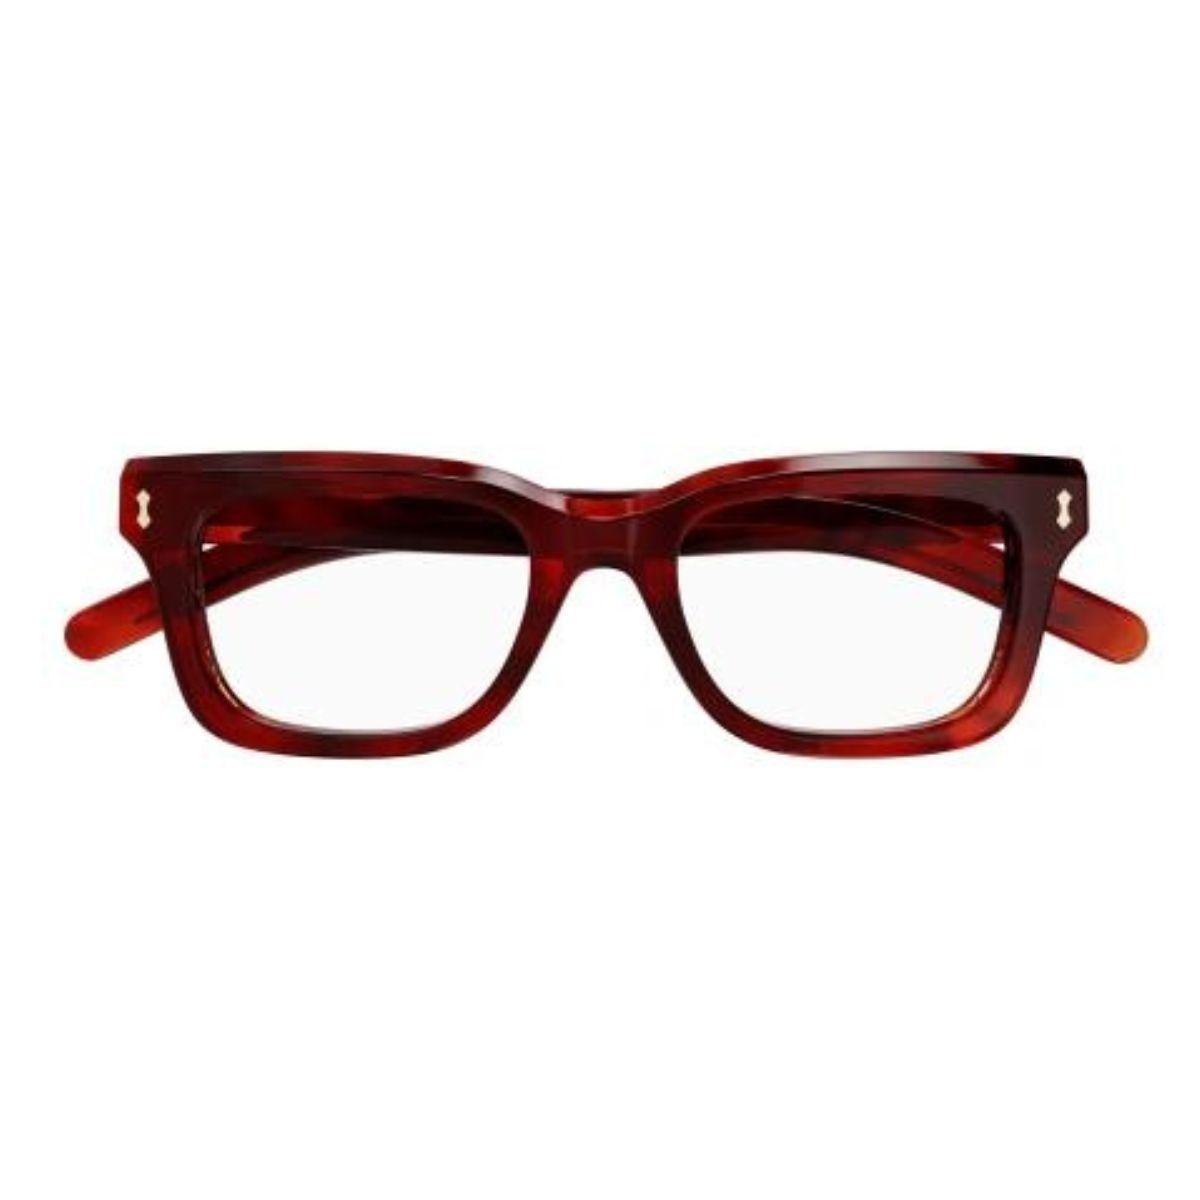 "buy Gucci GG1522O 007 women's eyeglasses frame online at optorium"